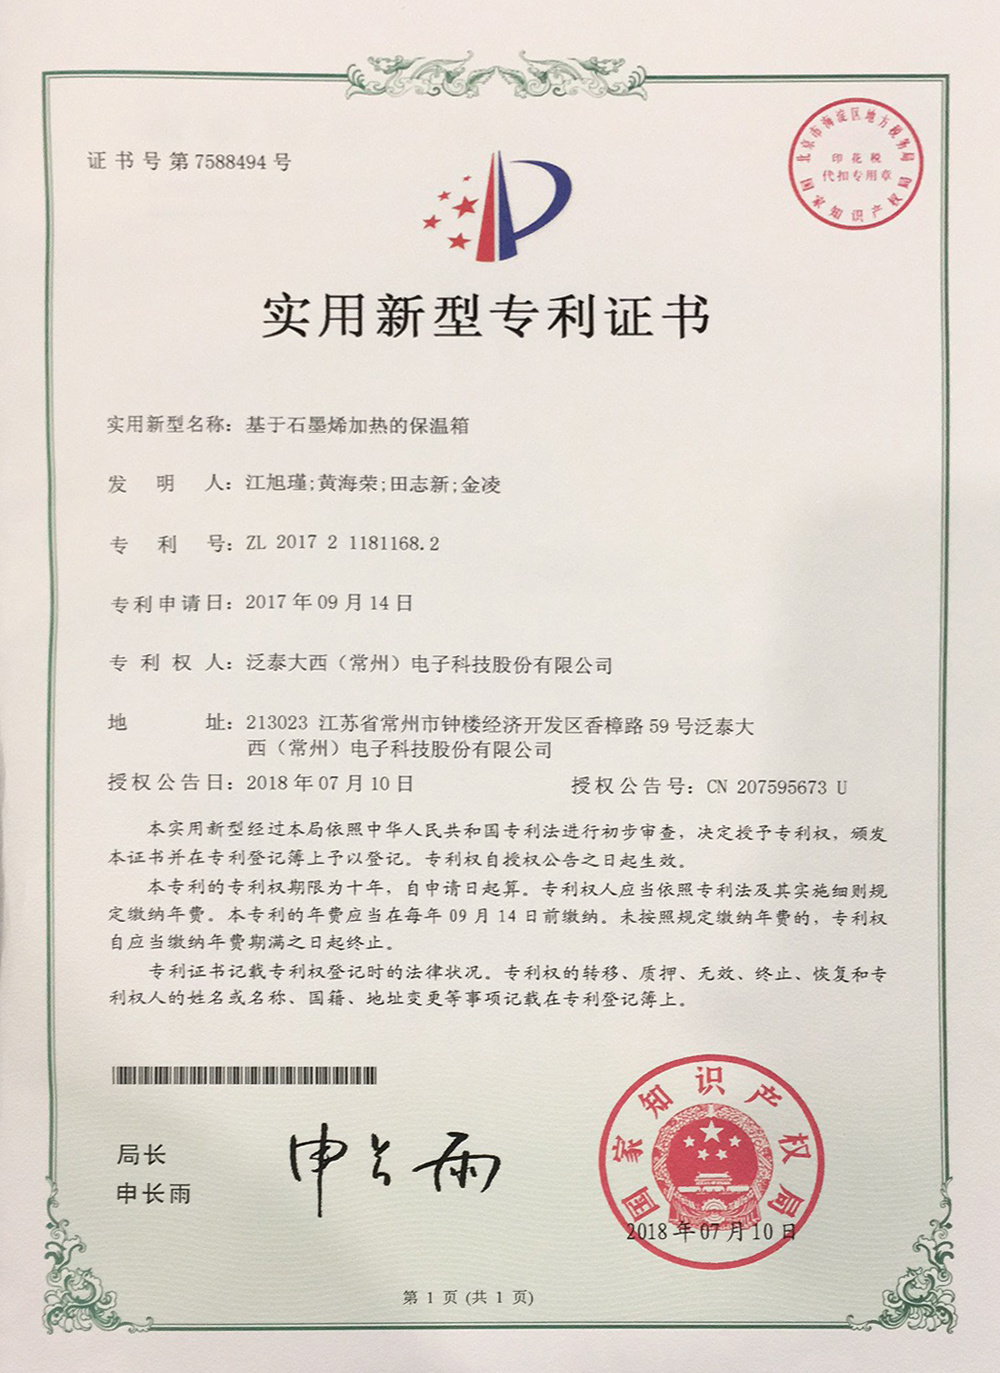 Patent certificate for incubator based on graphene heating